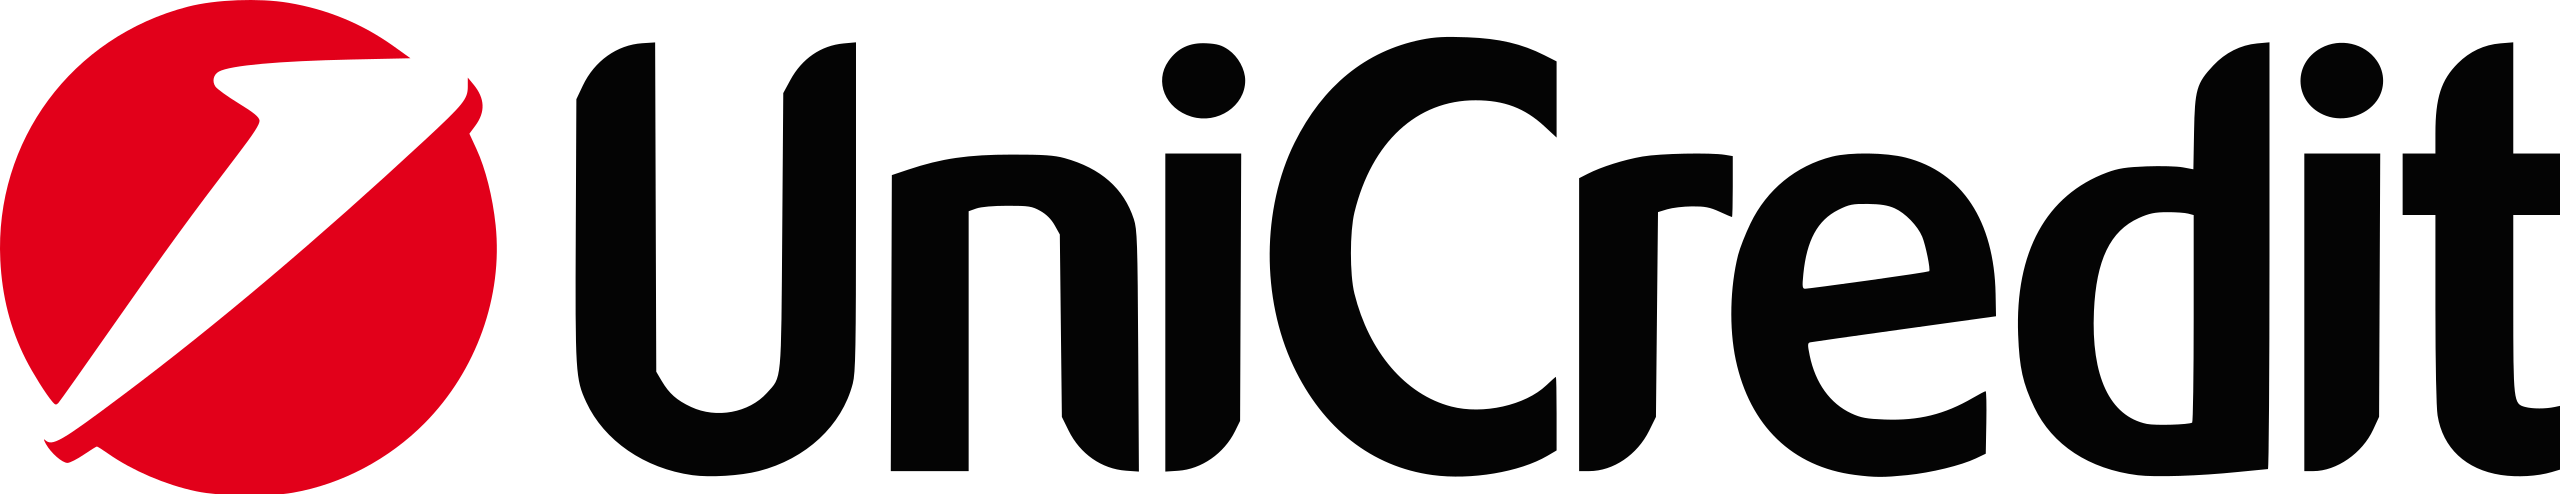 UniCredit_logo